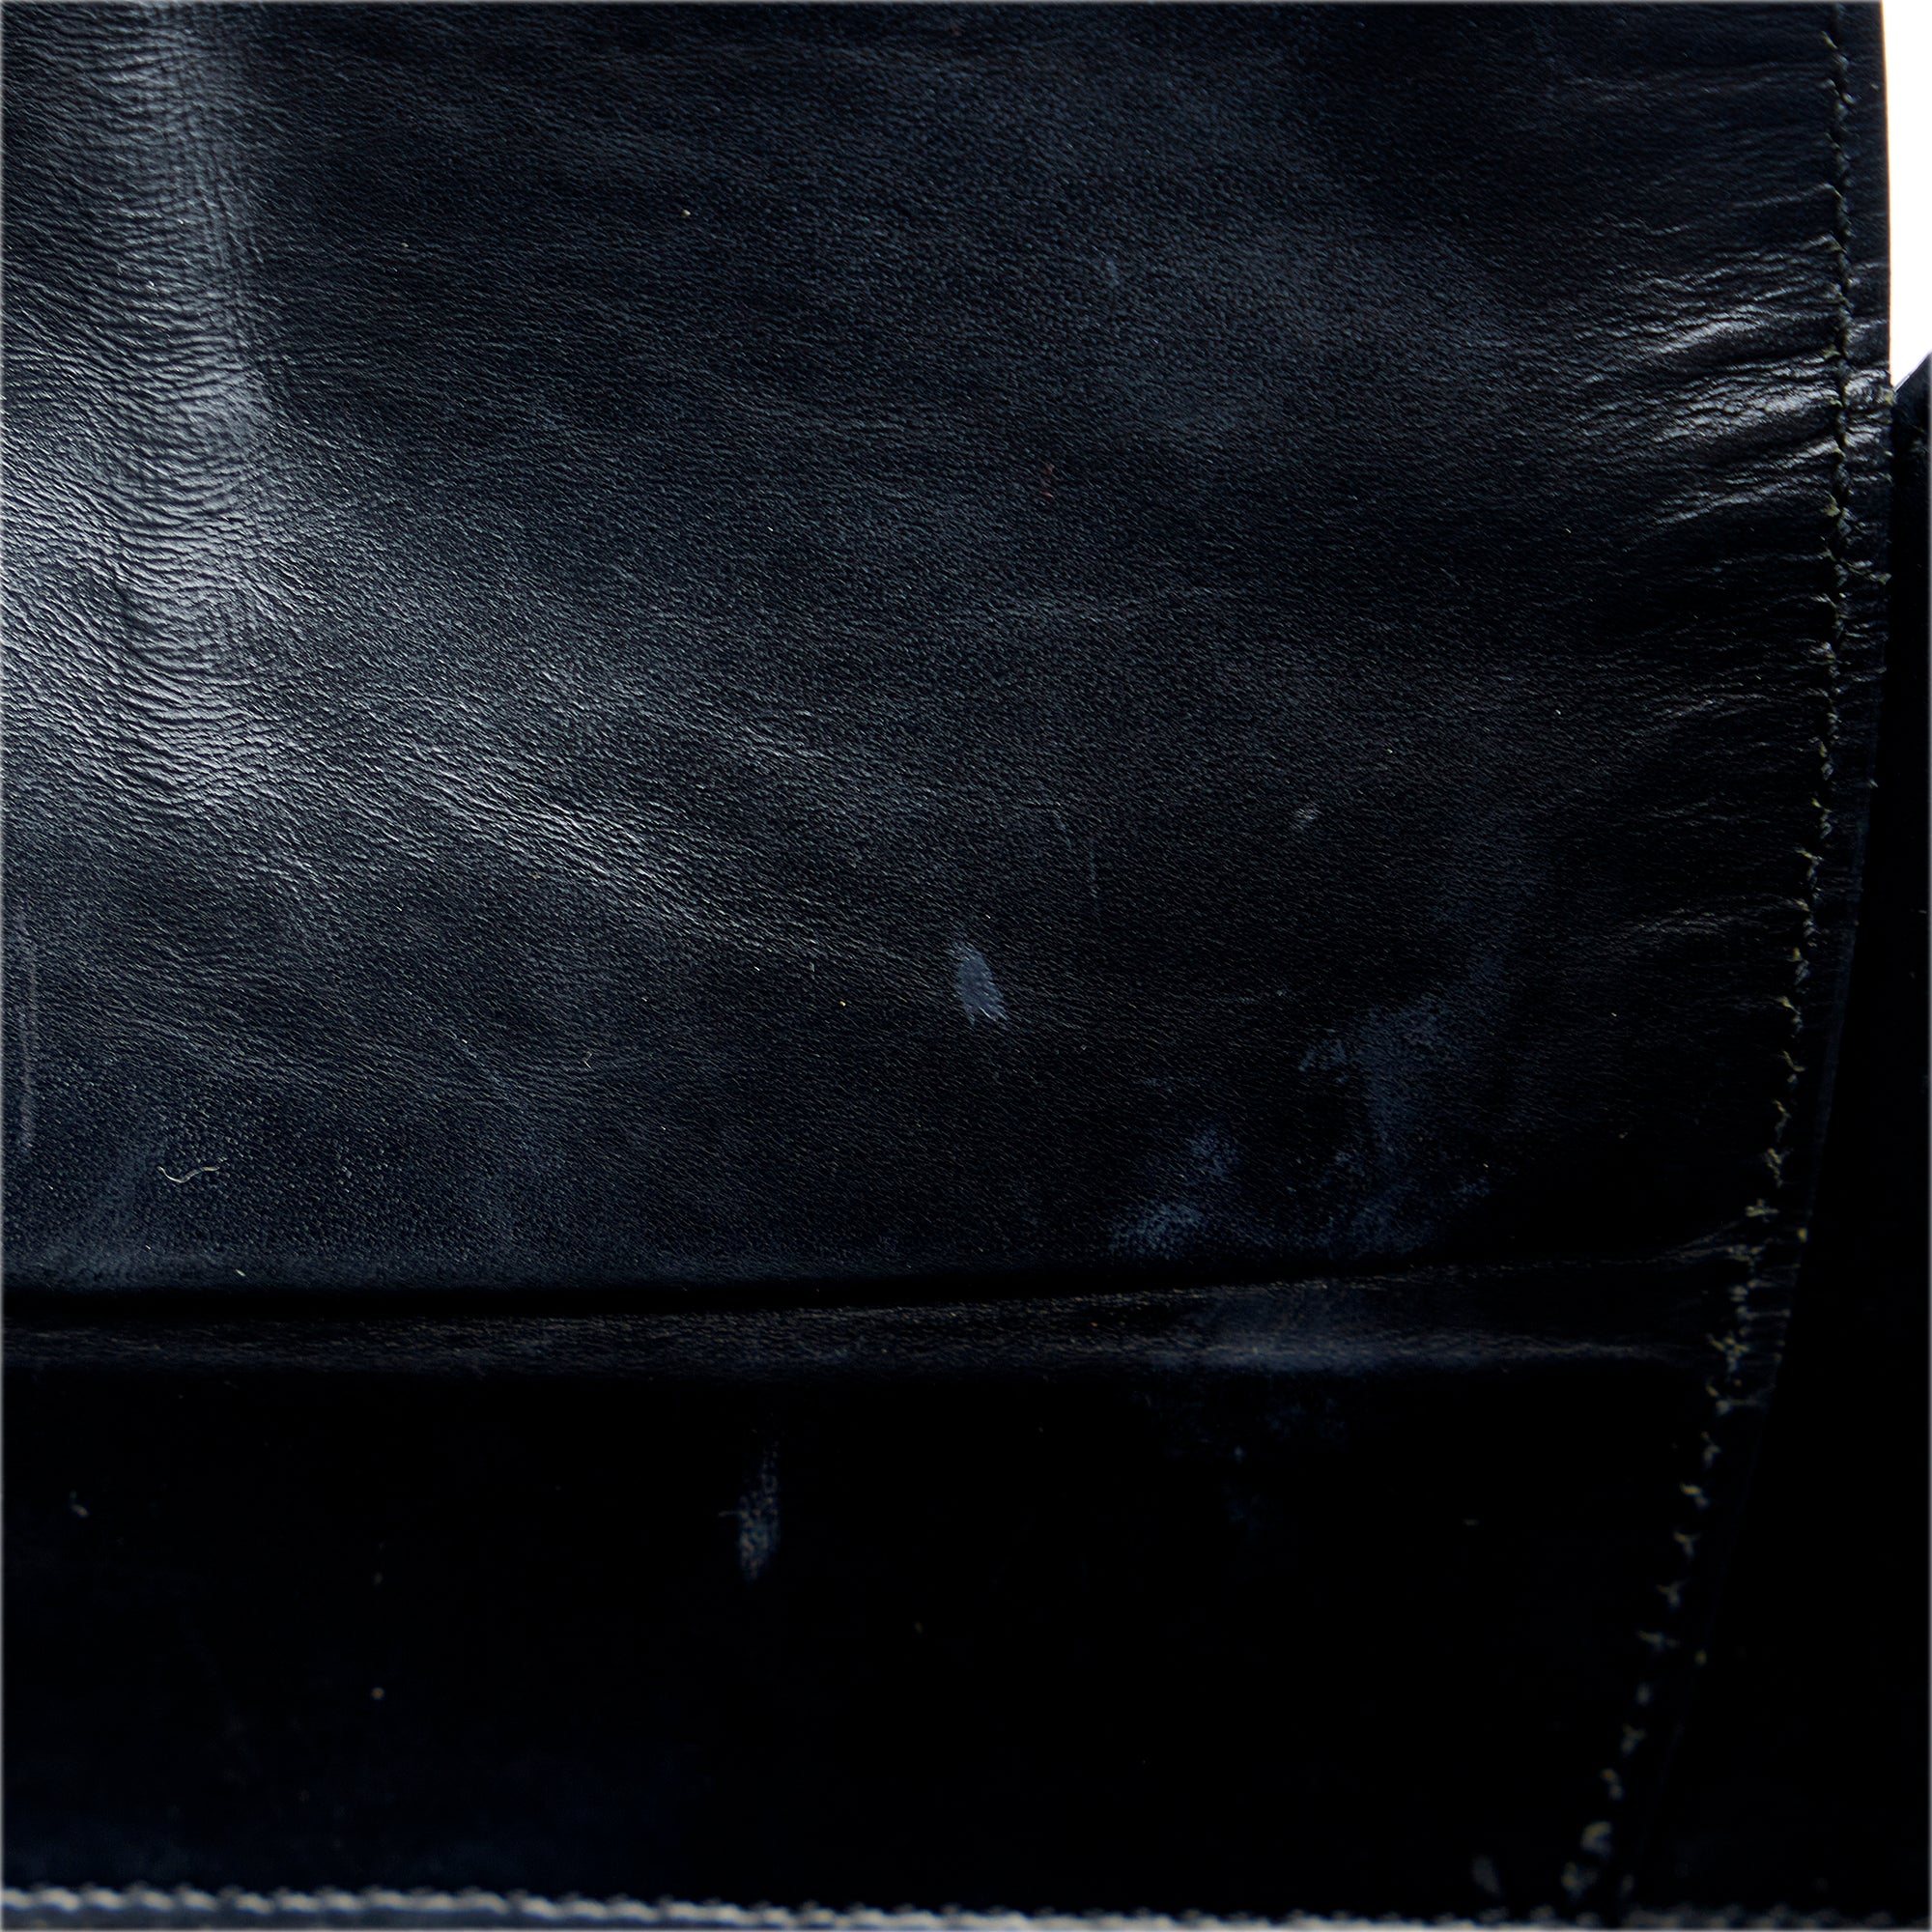 Louis Vuitton Epi Sac Verseau Bag - Vintage Handbag